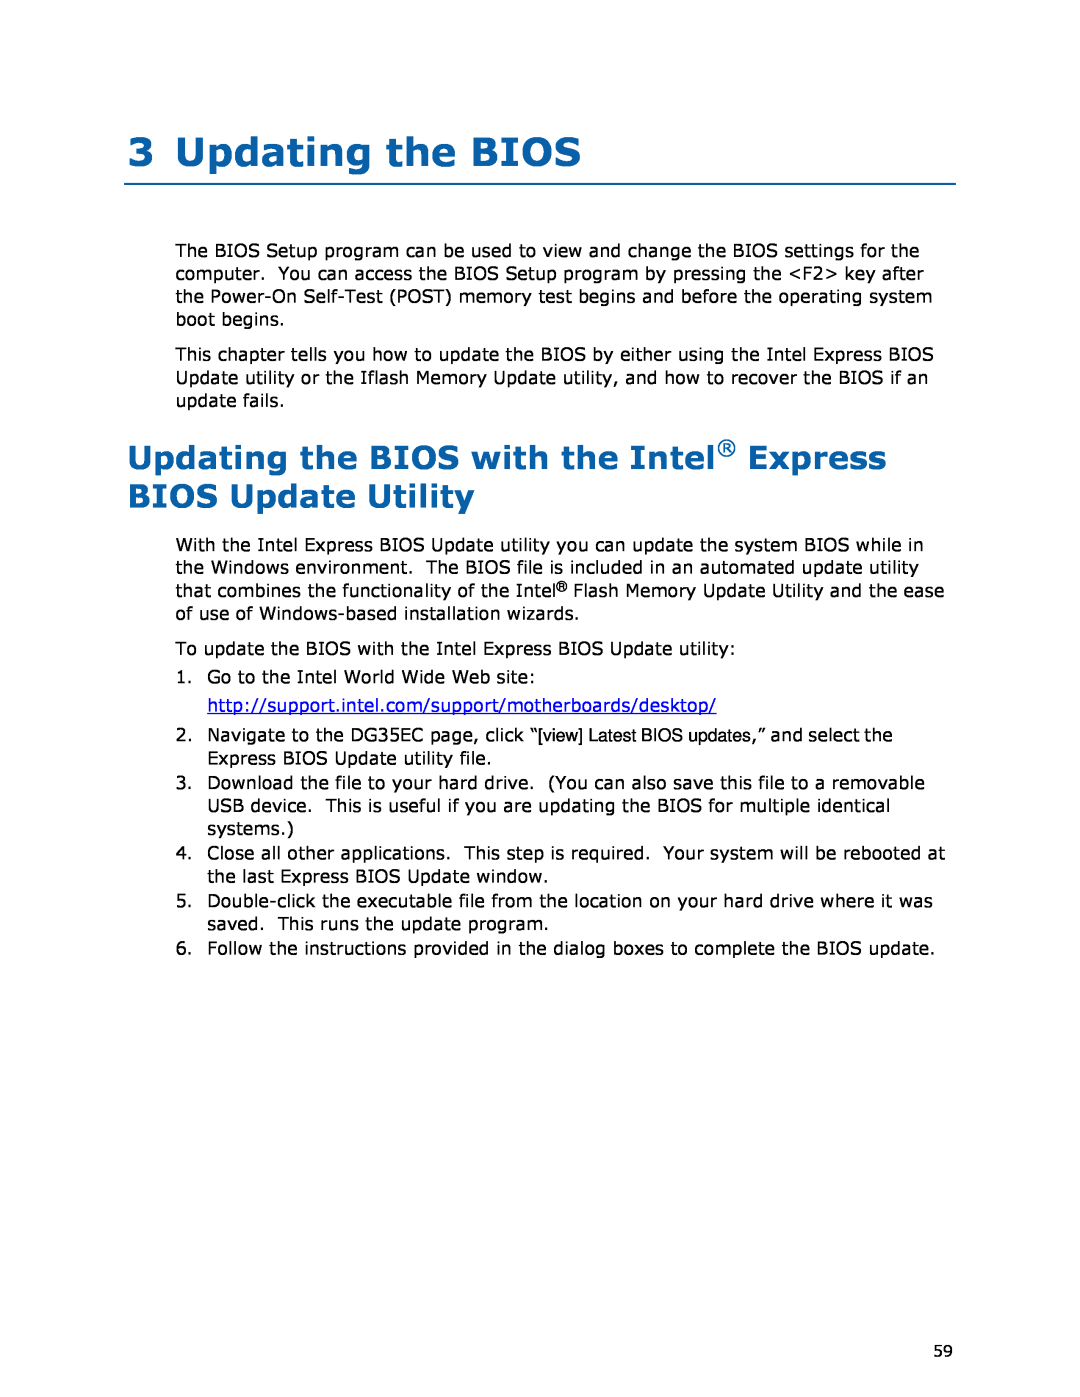 Intel DG35EC, Intel Desktop Board manual Updating the BIOS with the Intel Express BIOS Update Utility 